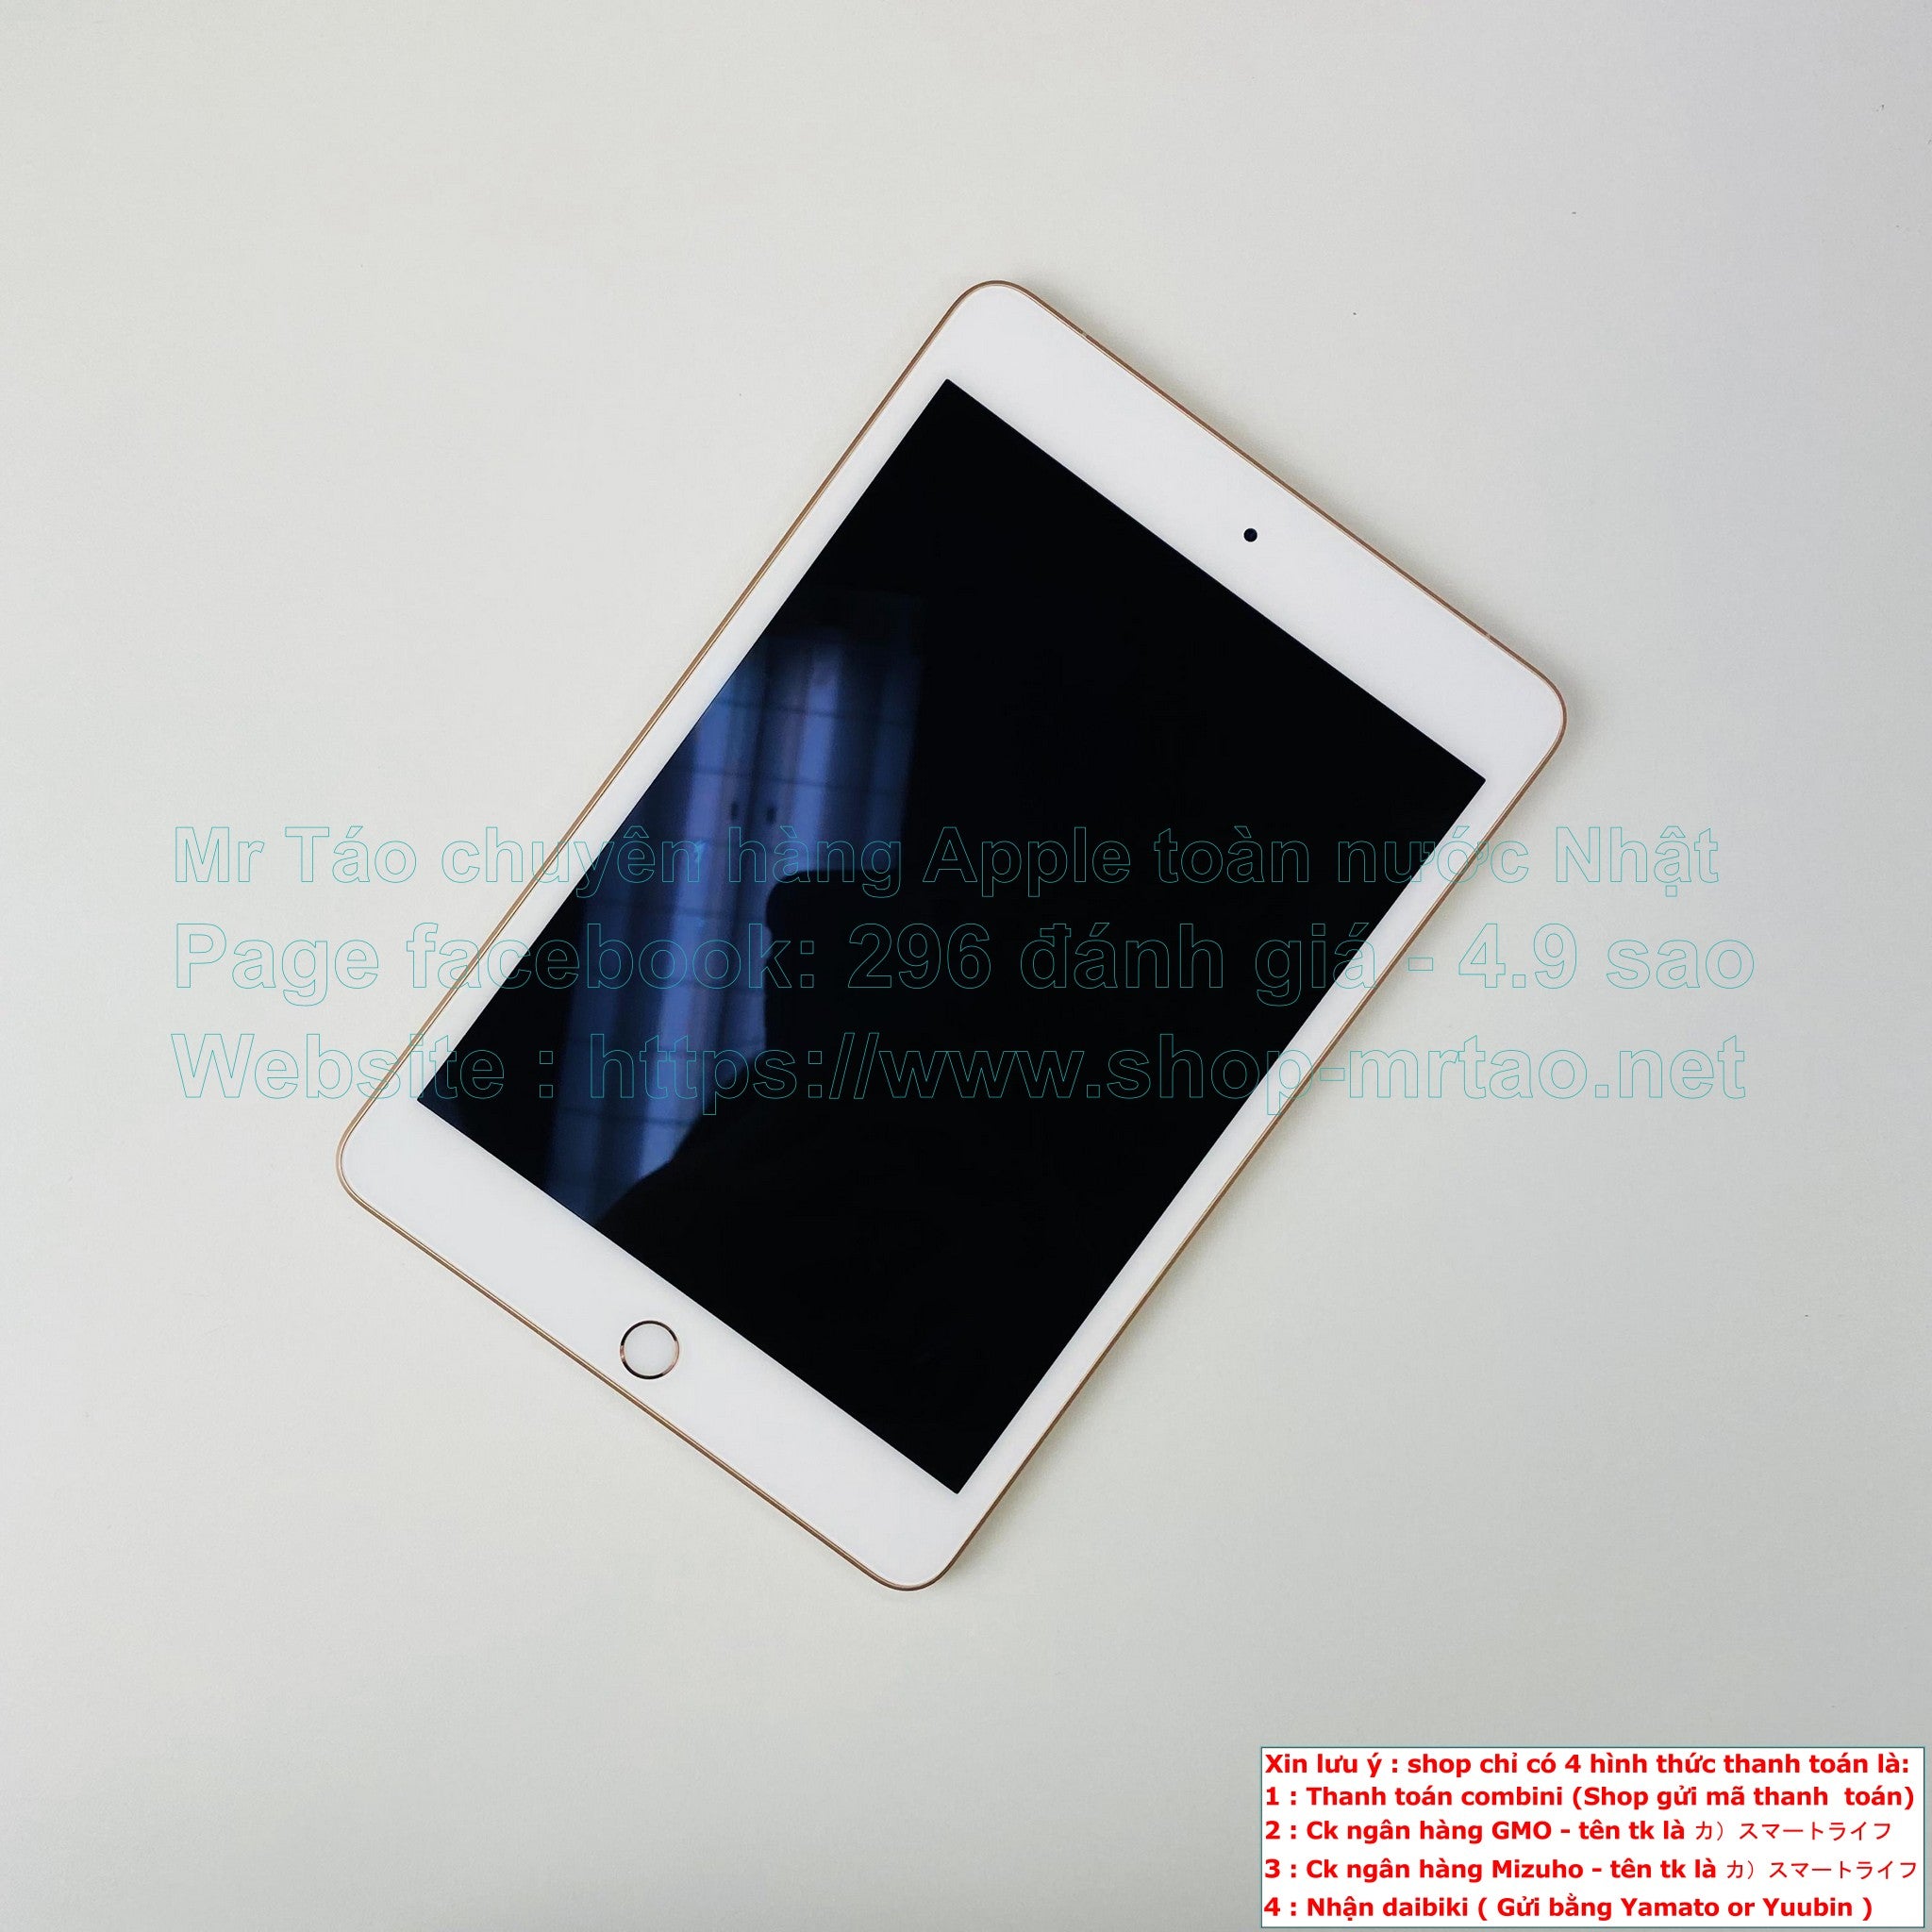 iPad Mini 5 Wifi and cellular Gold 256Gb 98% mã sp 42127. – Mr Táo 